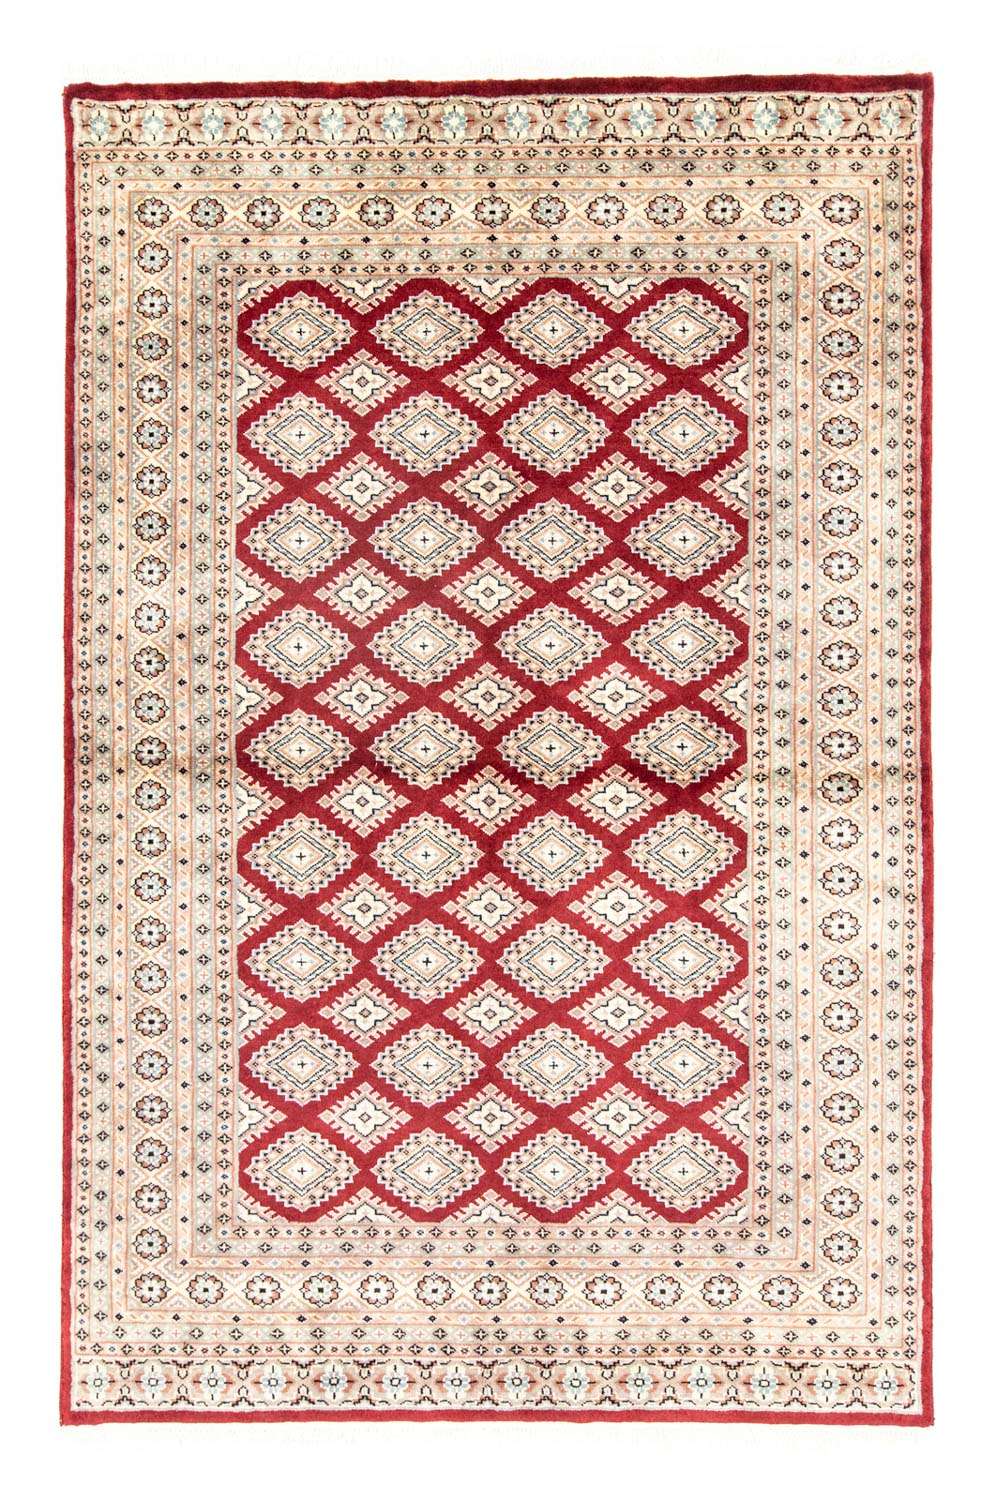 Pakistani Rug - 198 x 136 cm - red